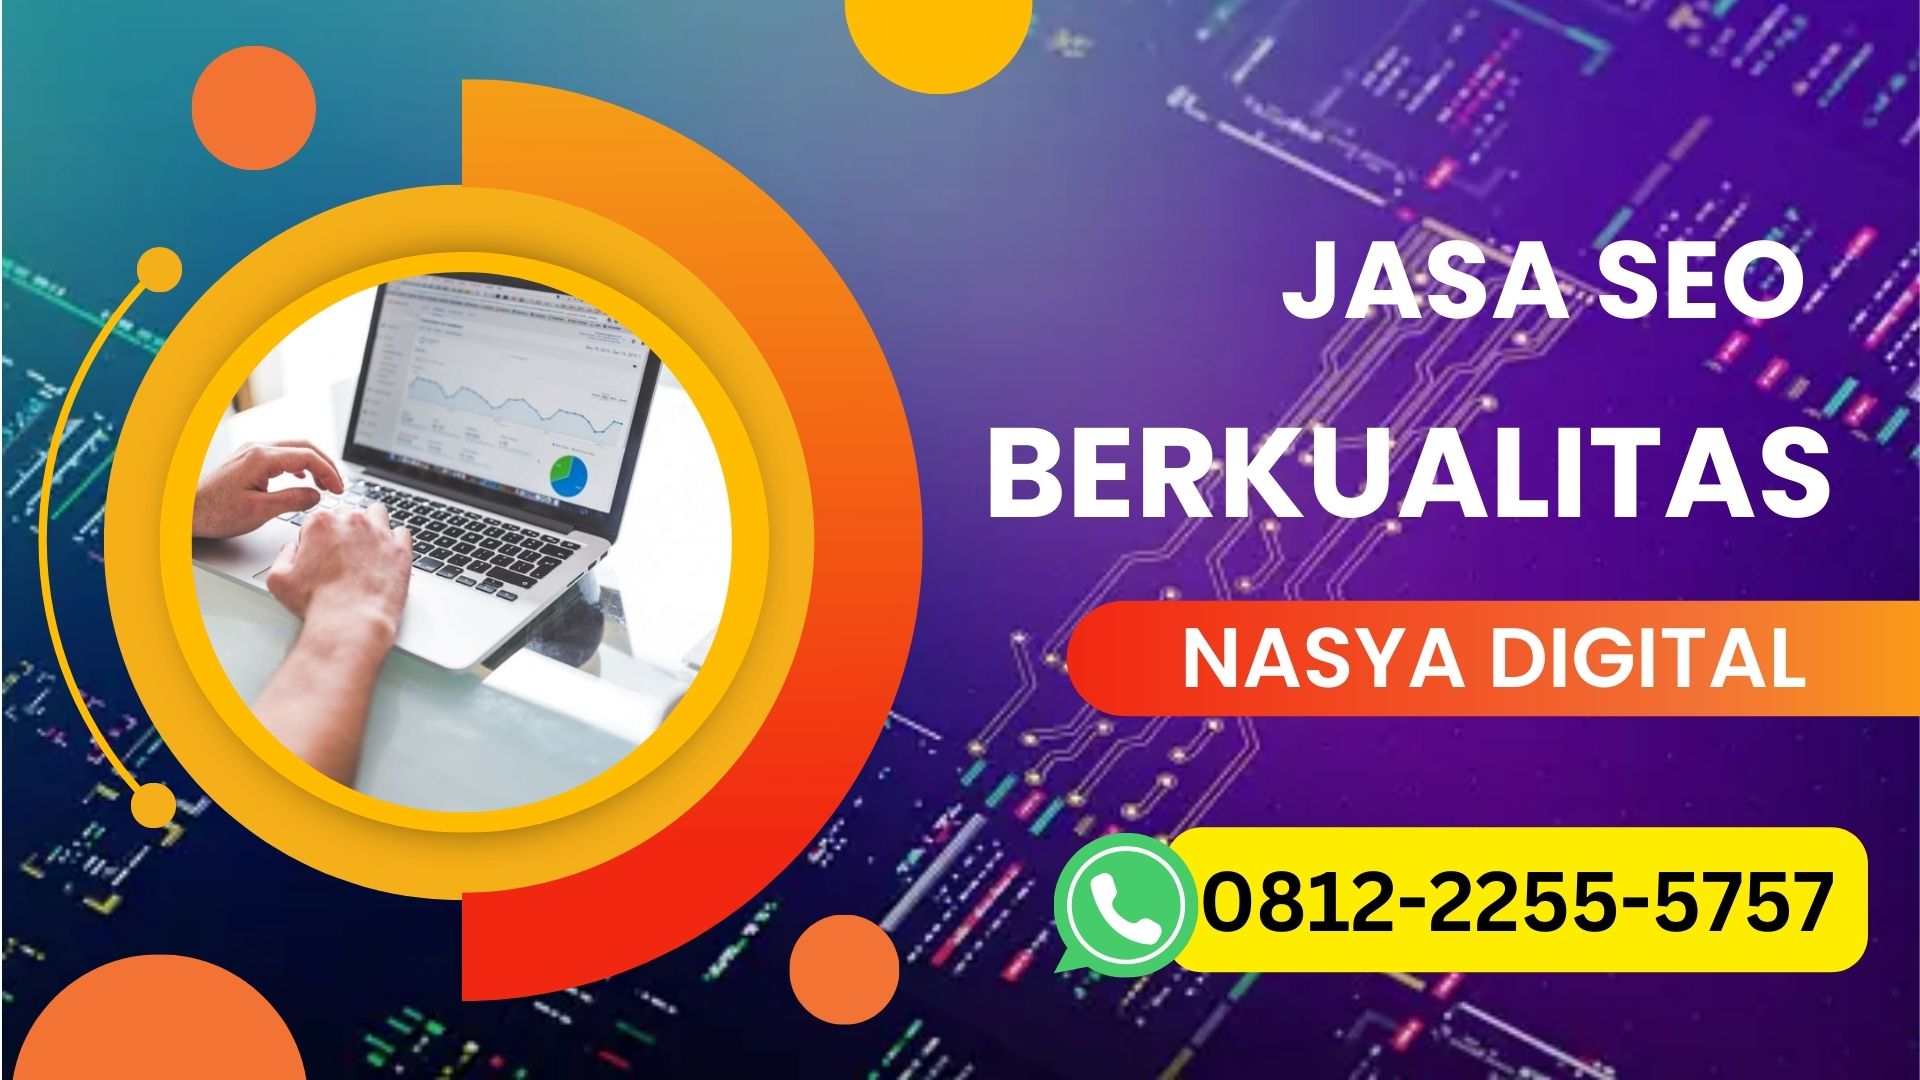 Jasa SEO Berkualitas Specialist Website Profesional, Hubungi WA 081222555757